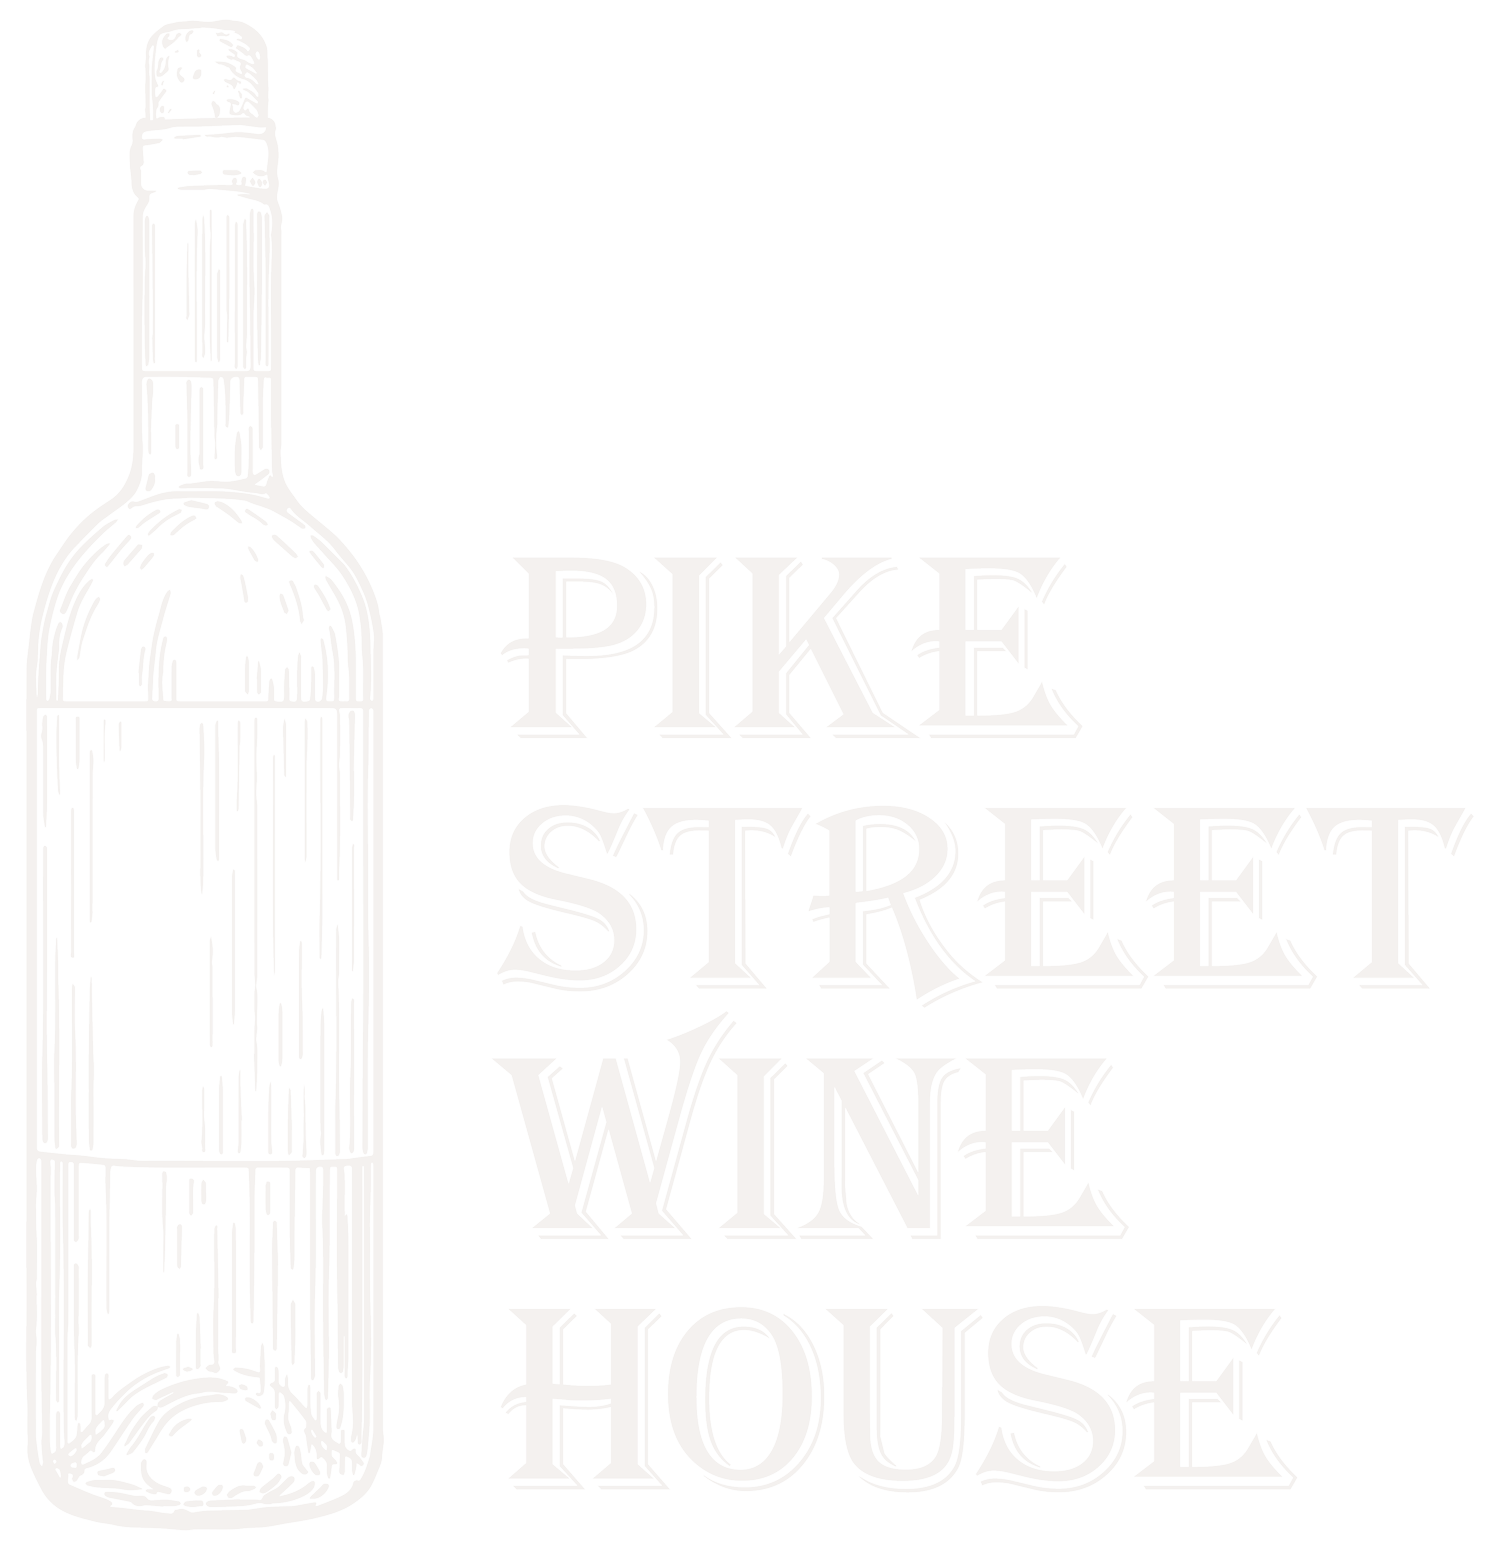 Pike Street Wine House